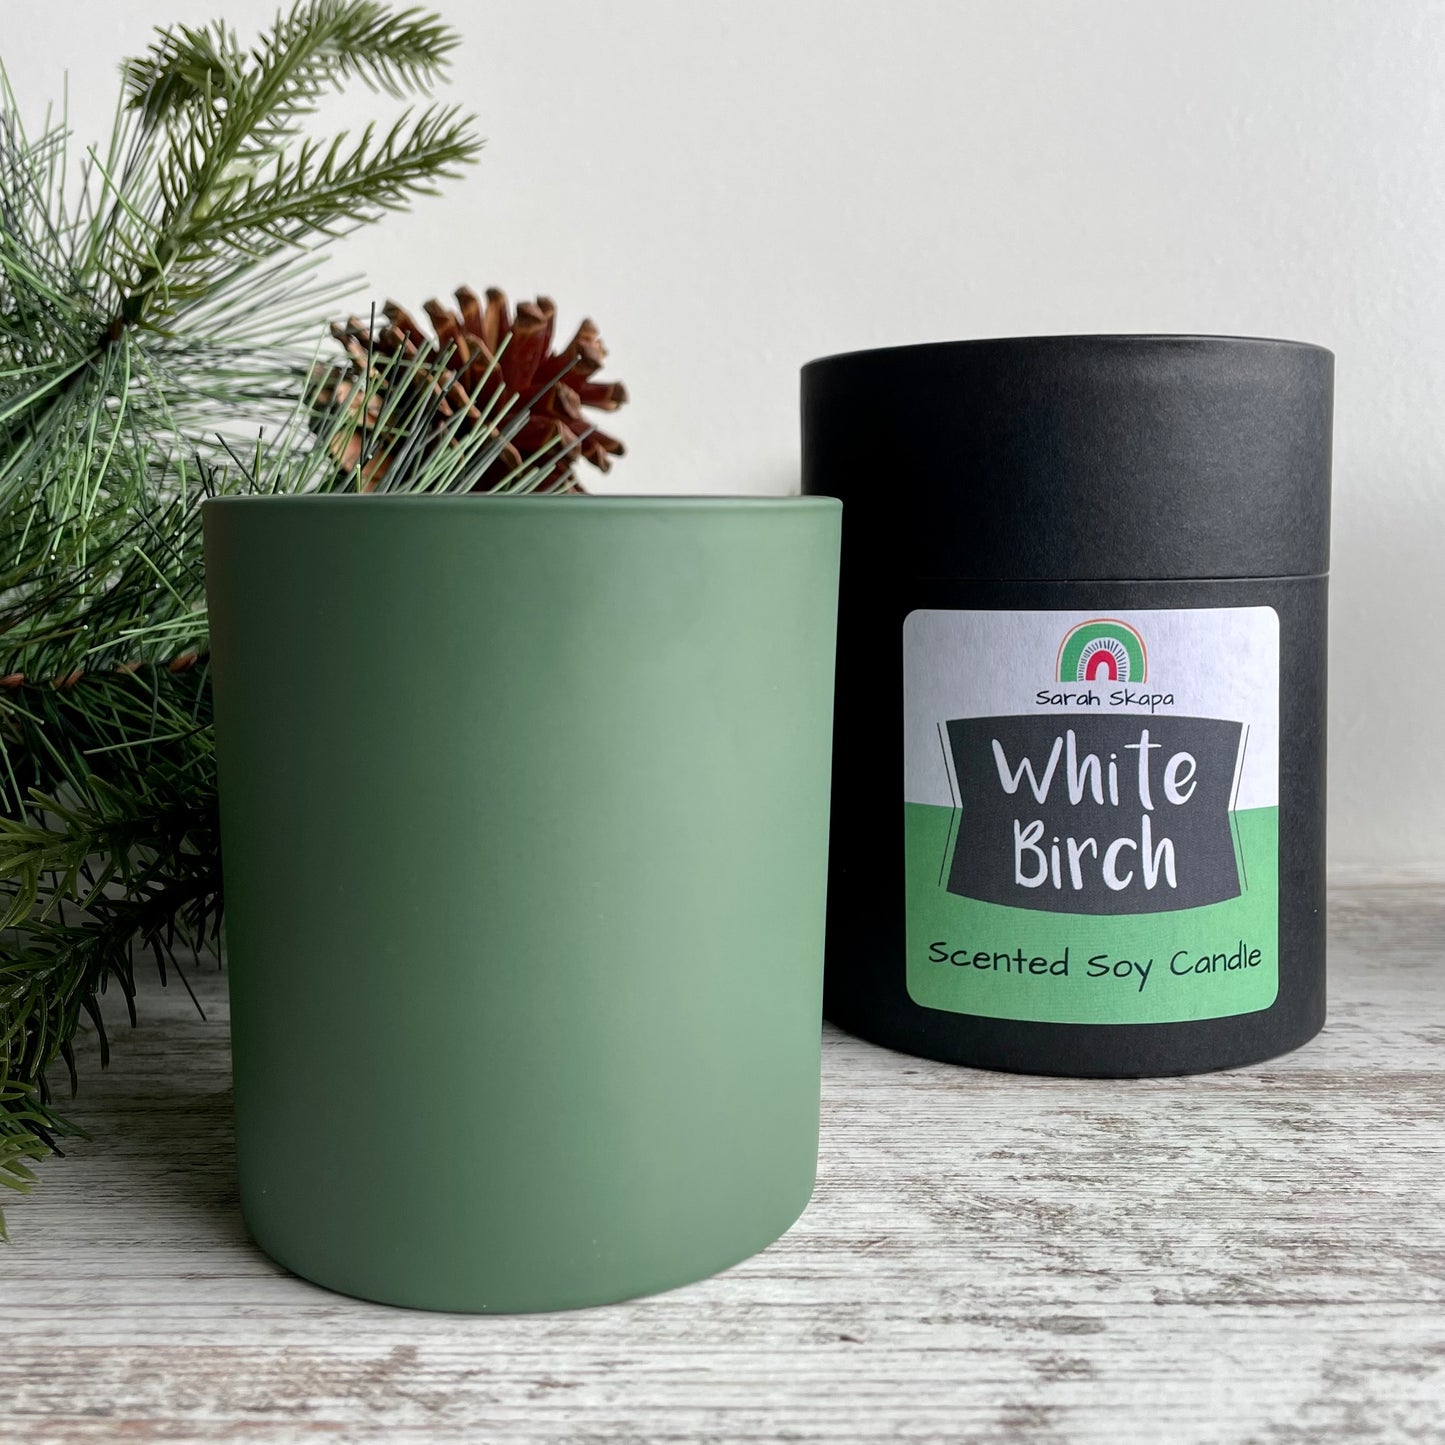 White Birch Specialty Candle Sarah Skapa